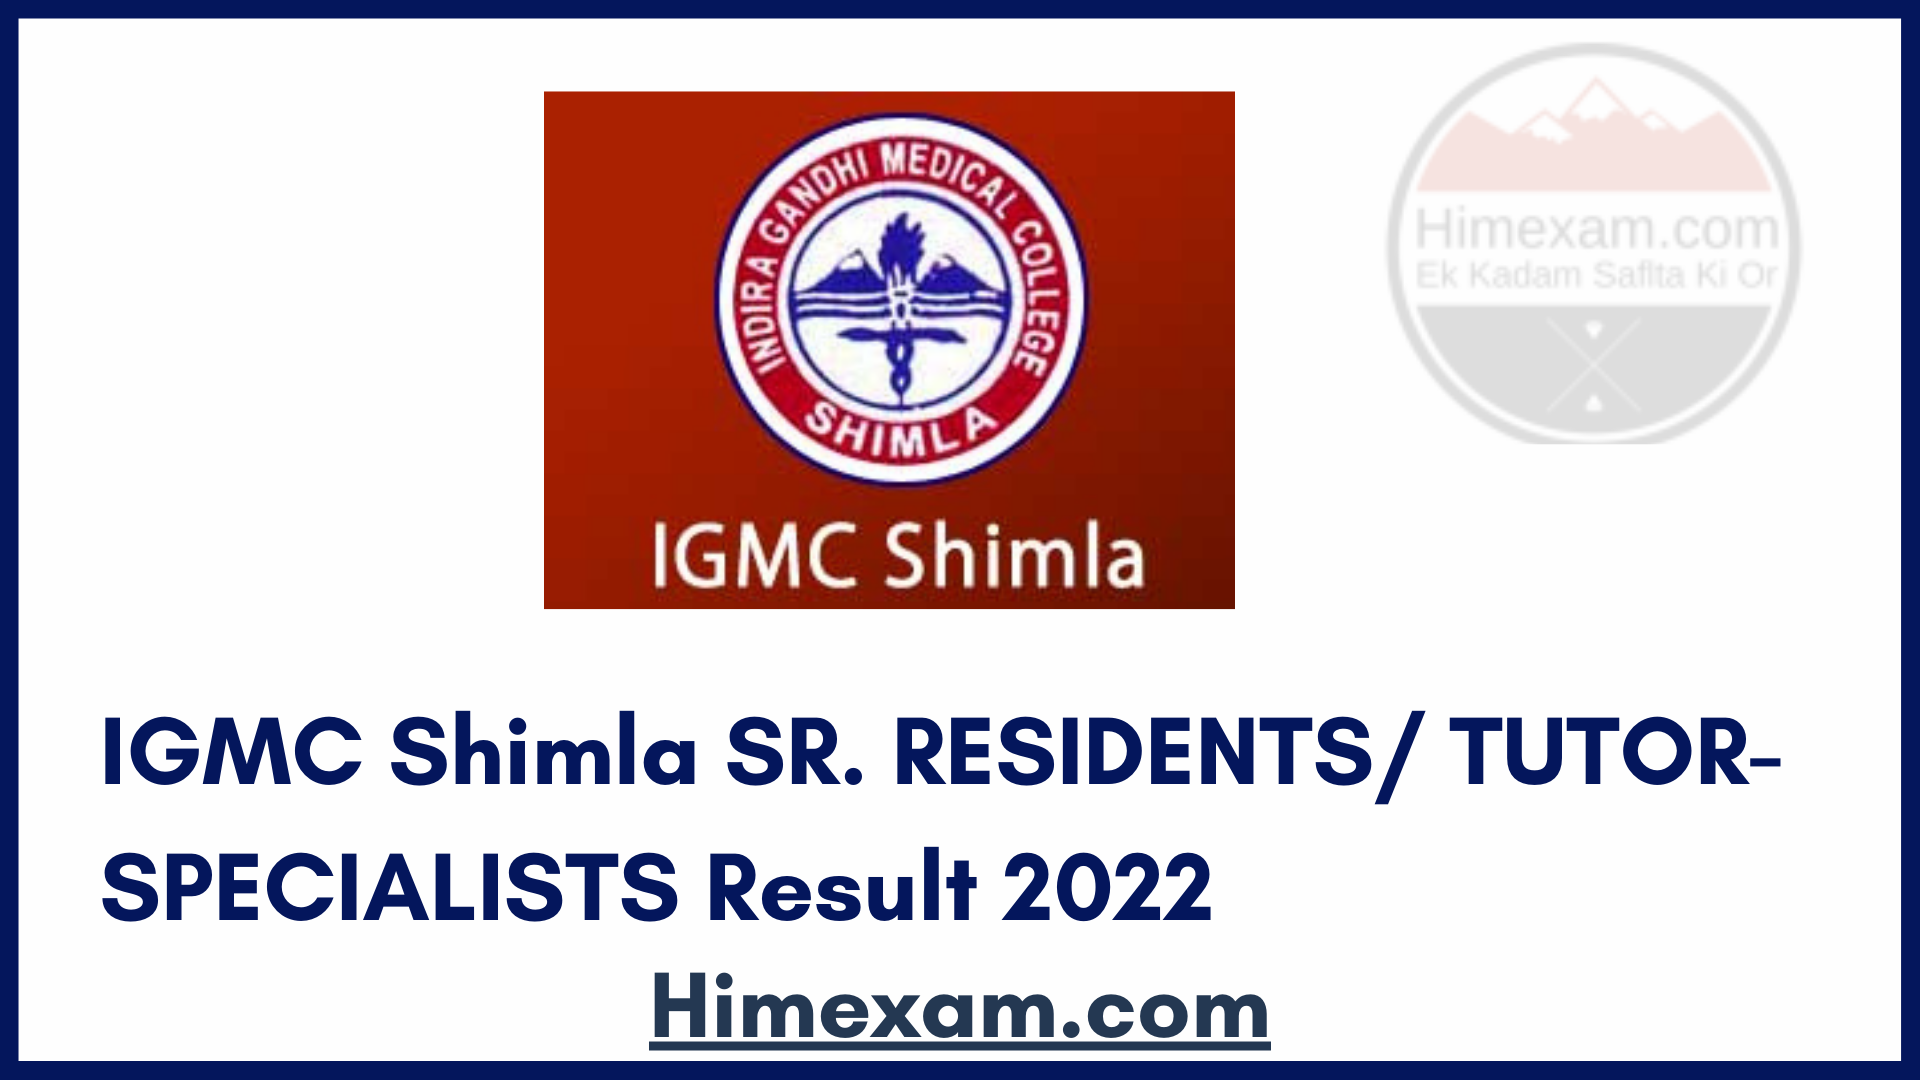 IGMC Shimla SR. RESIDENTS/ TUTOR-SPECIALISTS Result 2022